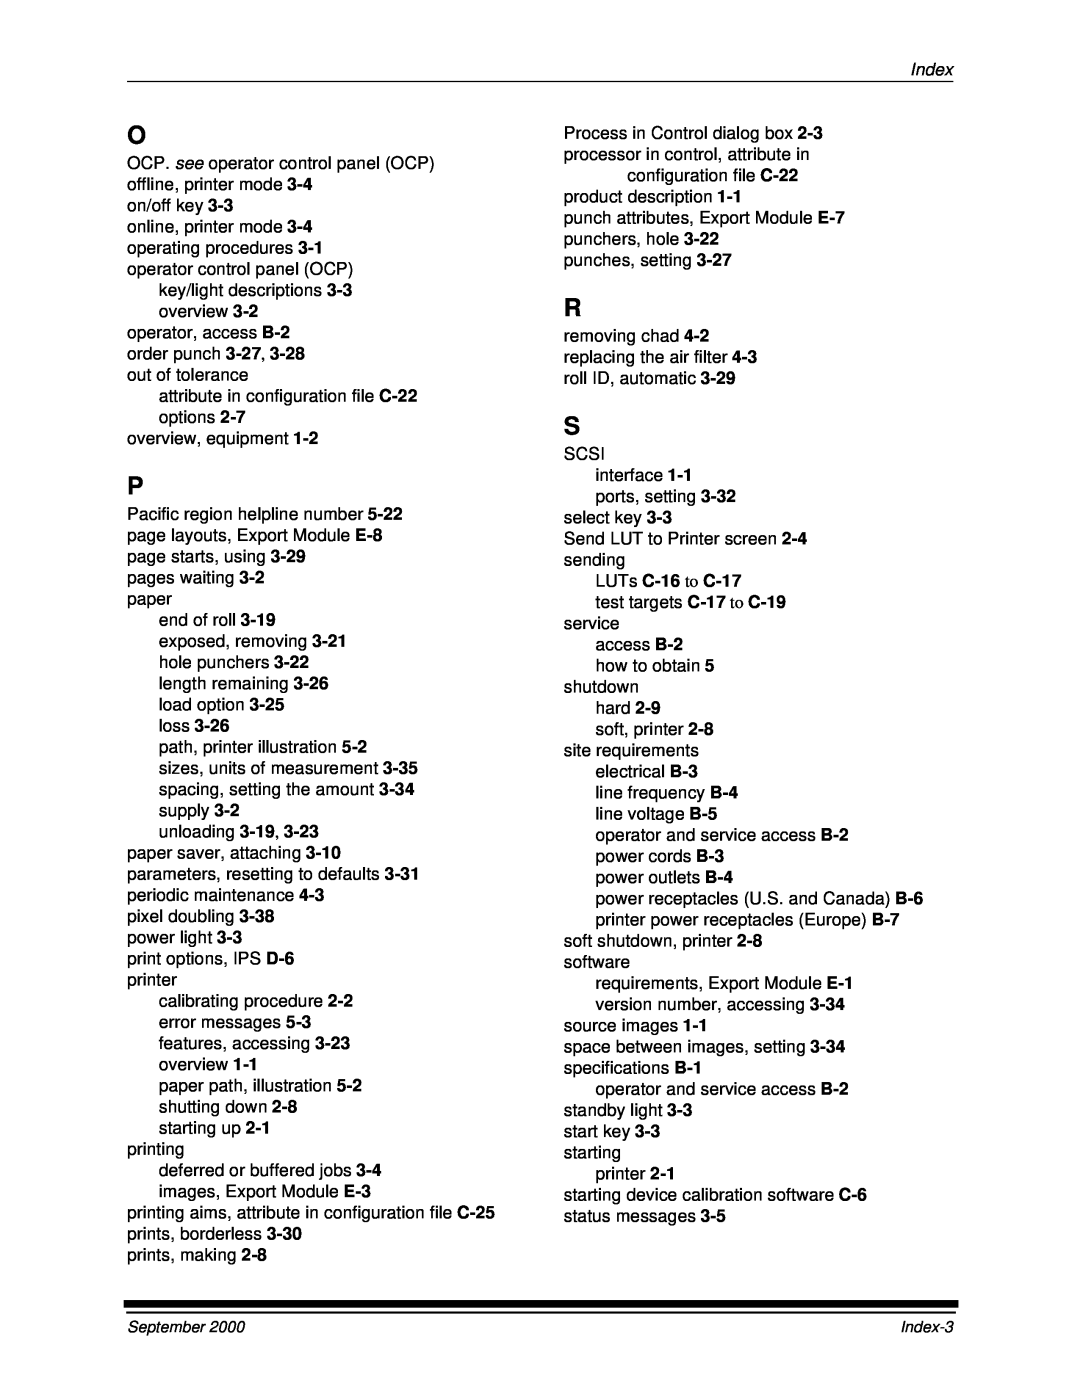 Kodak 20R manual Index, LUTs C-16 to C-17 